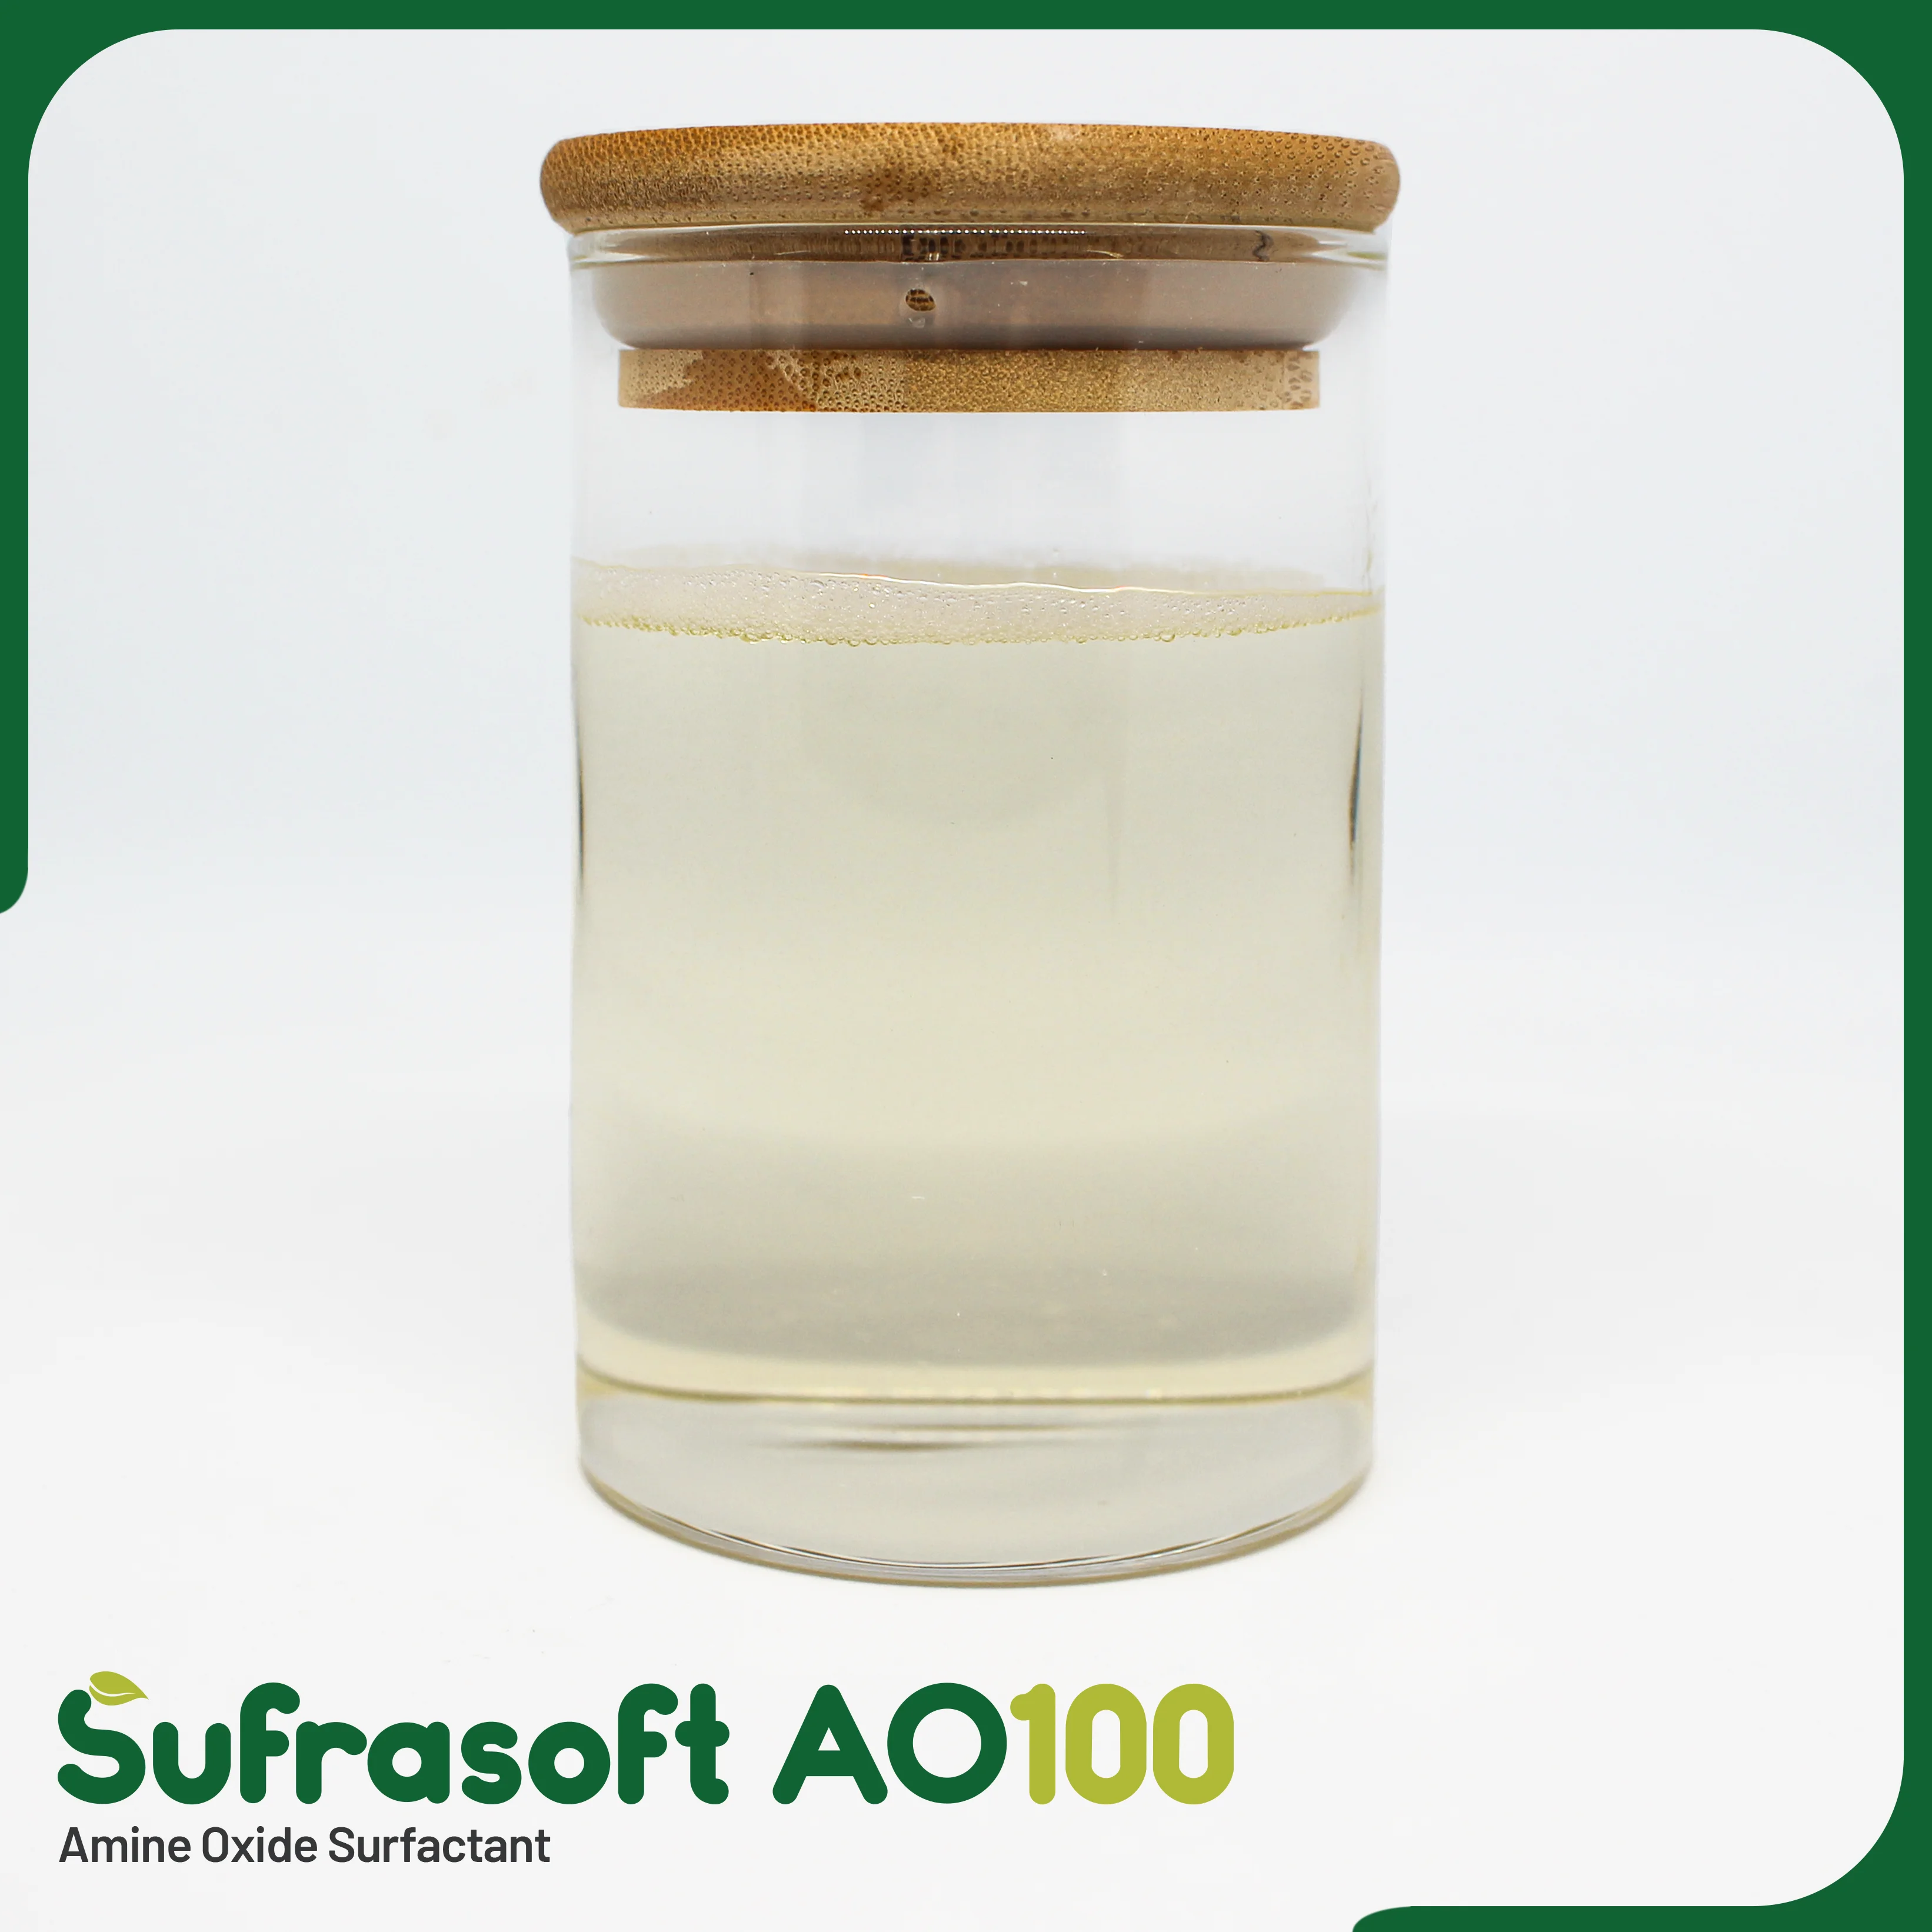 Sufrasoft-AO100